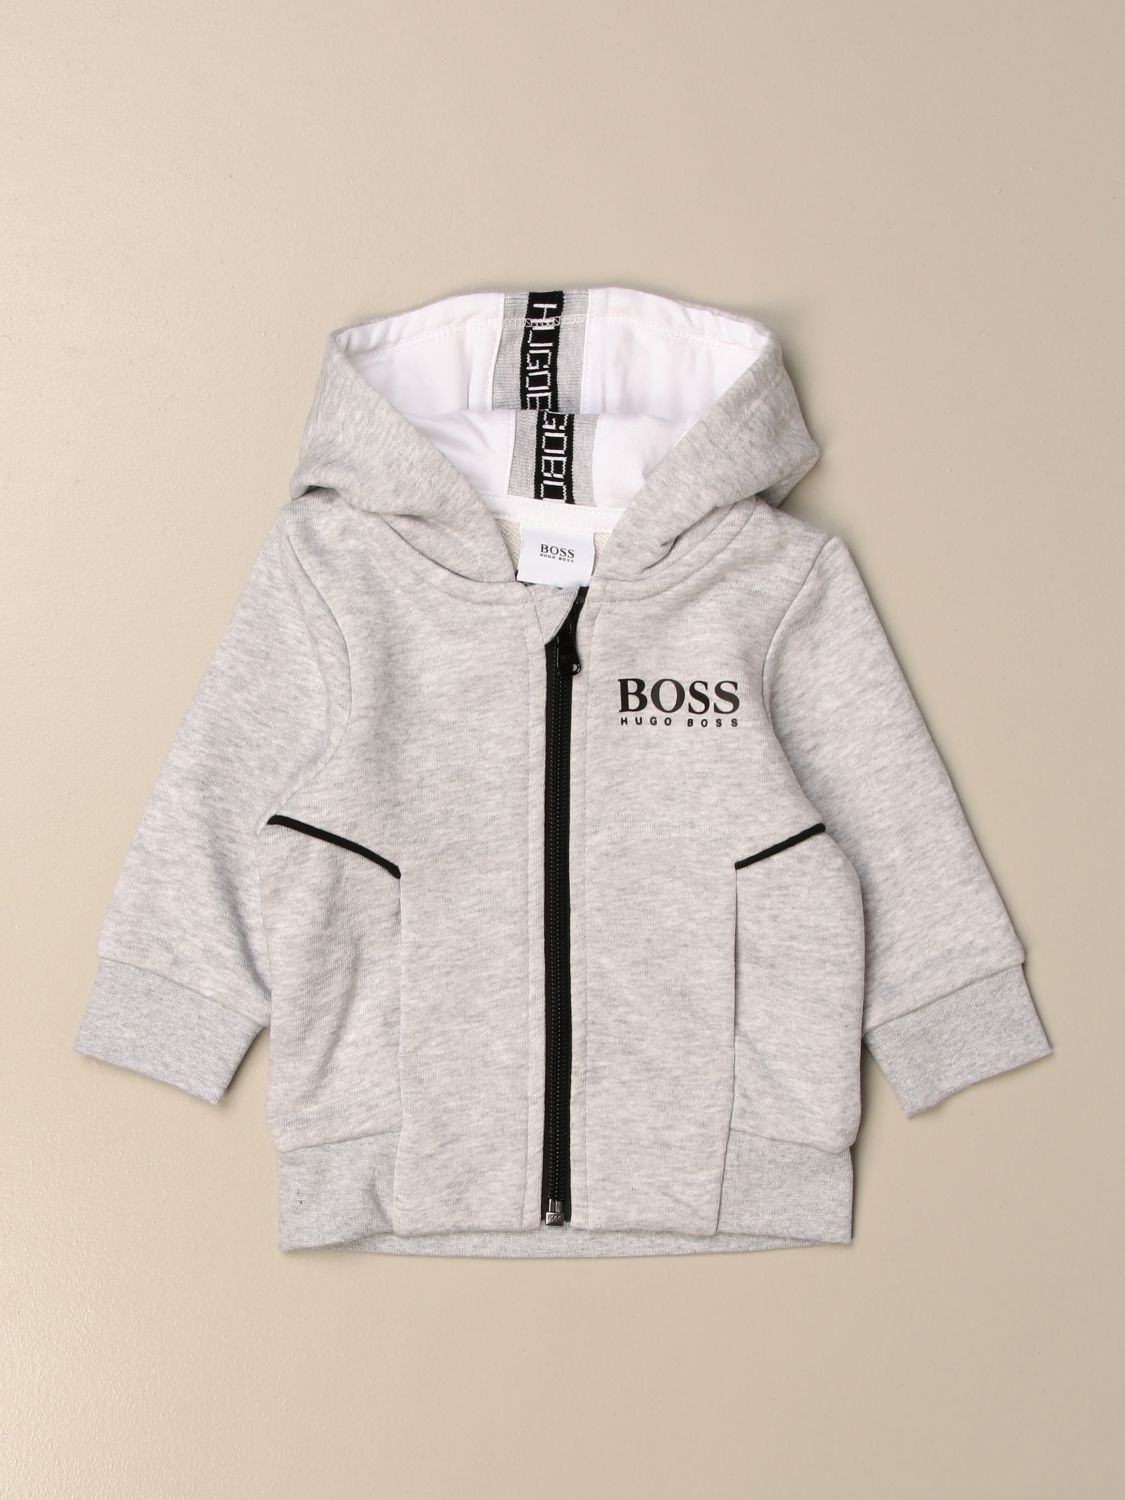 hugo boss grey sweater